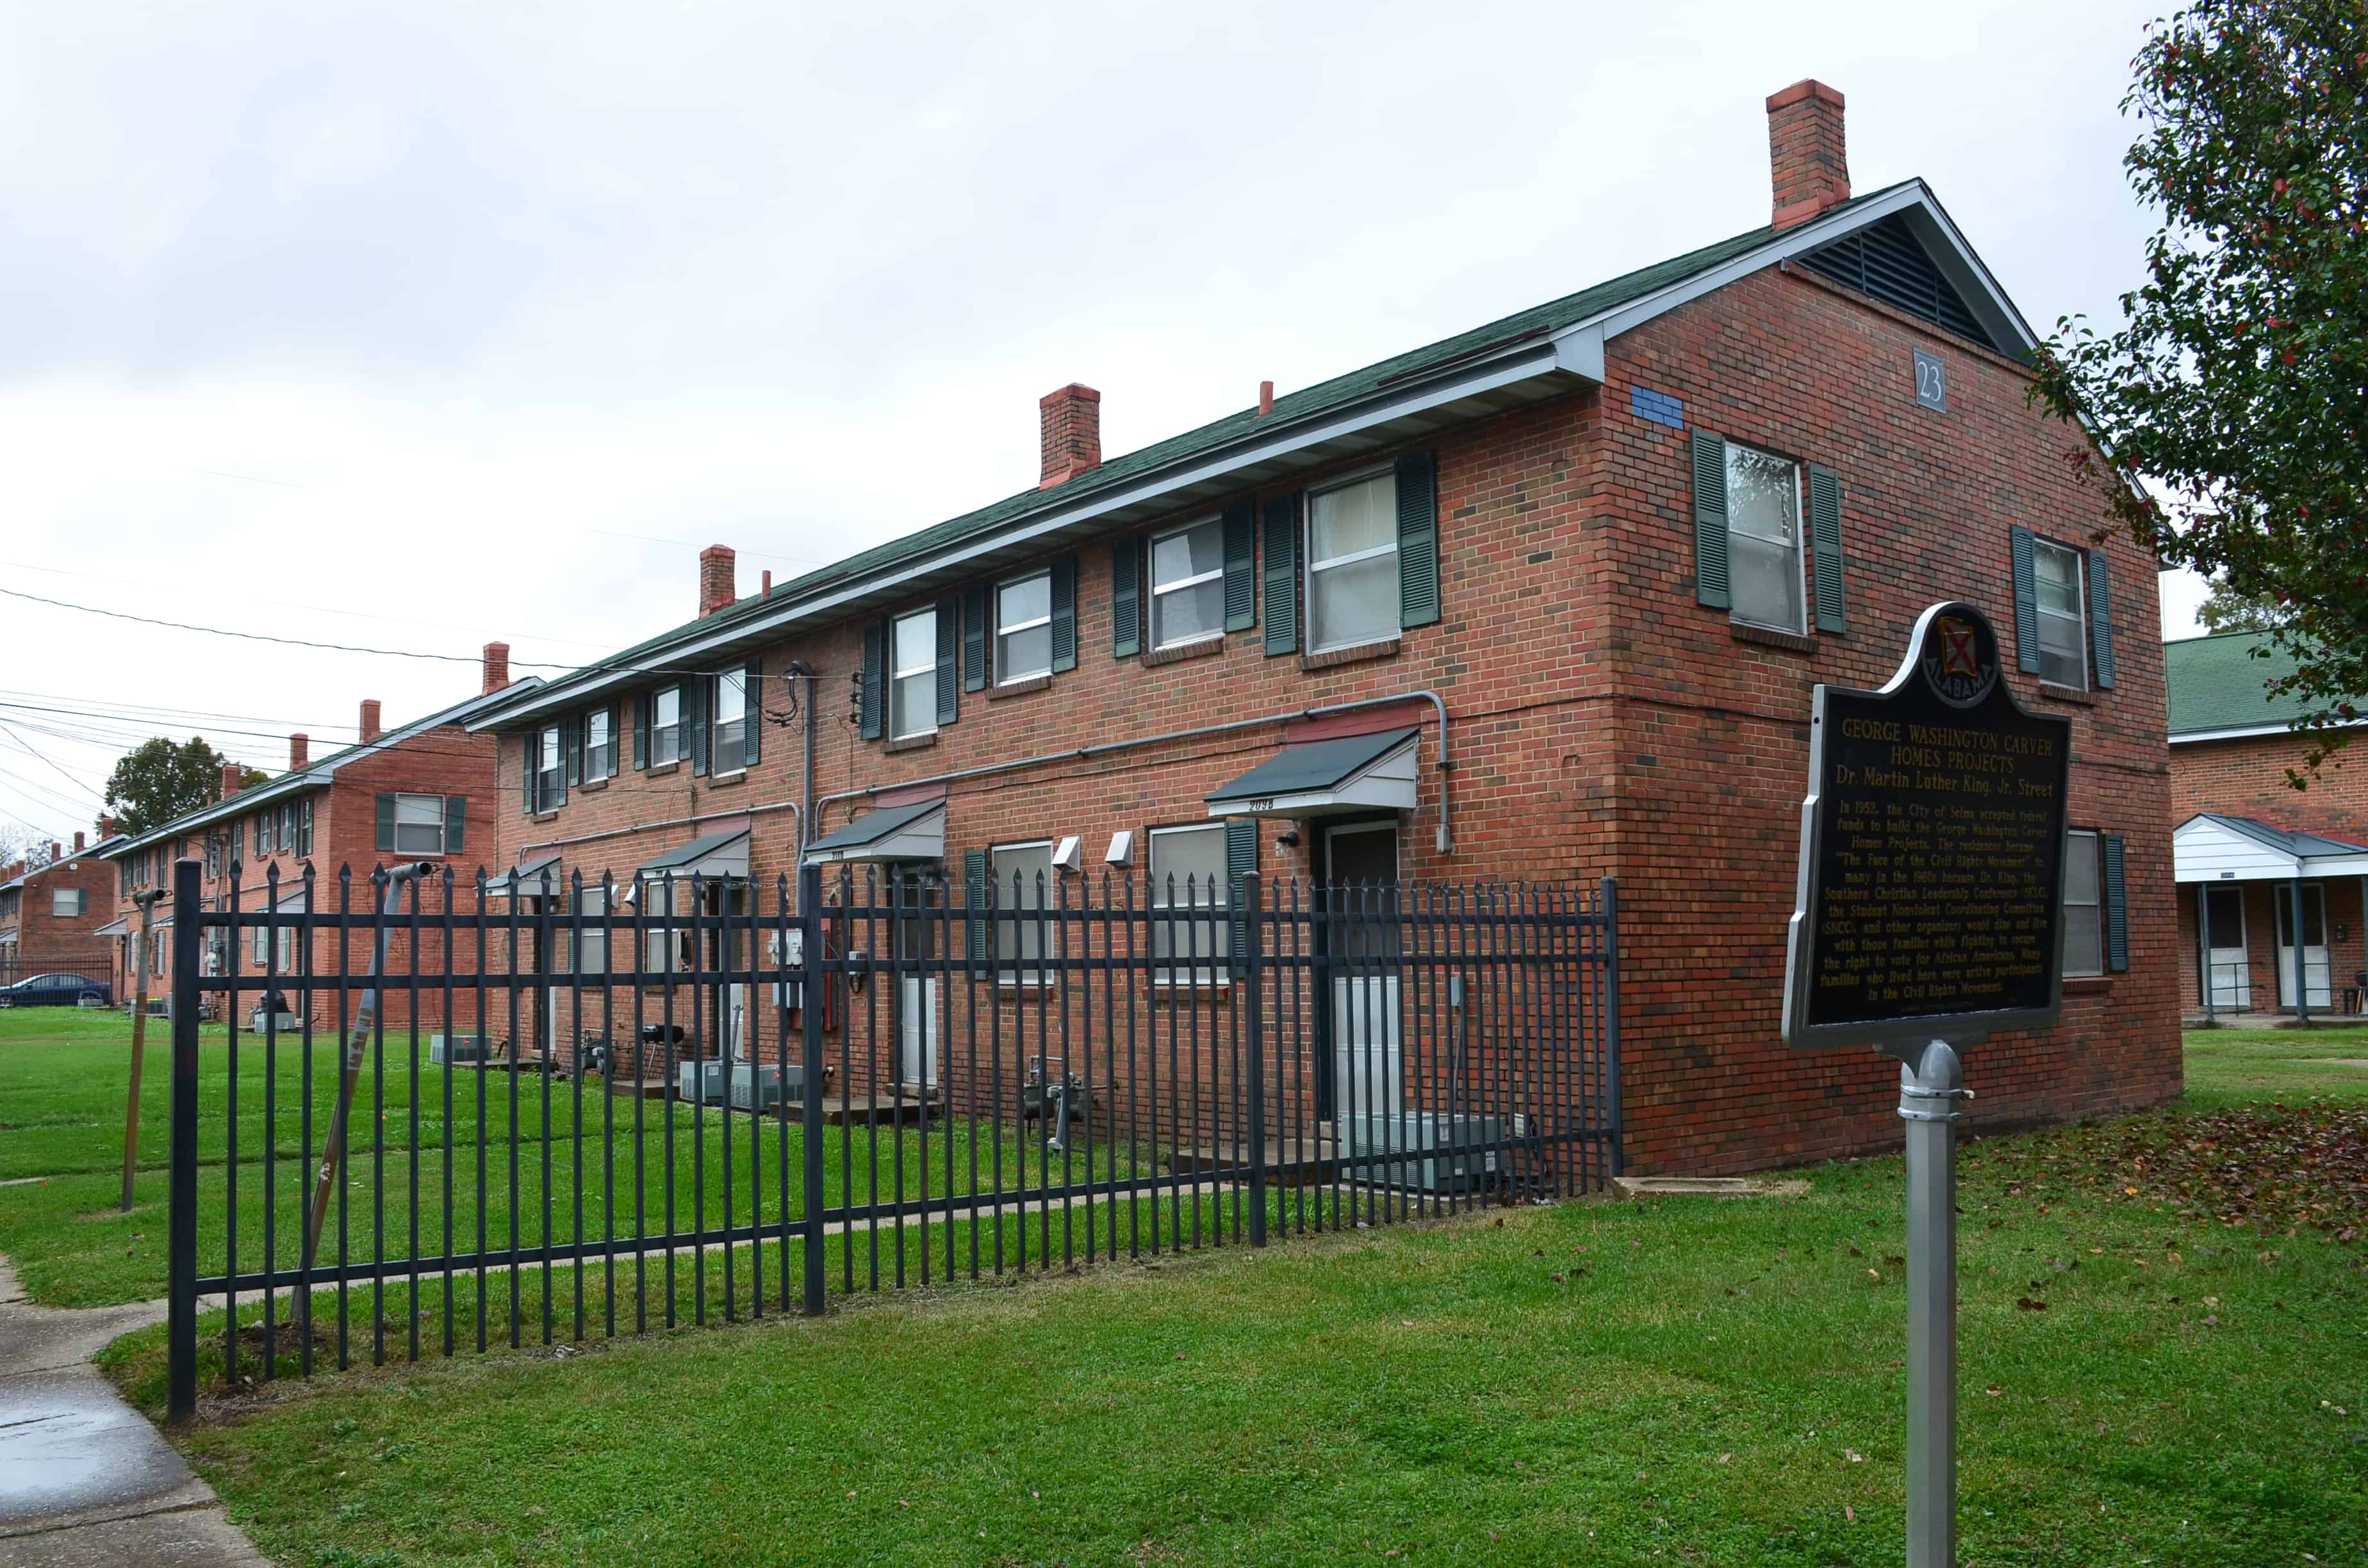 George Washington Carver Homes in Selma, Alabama